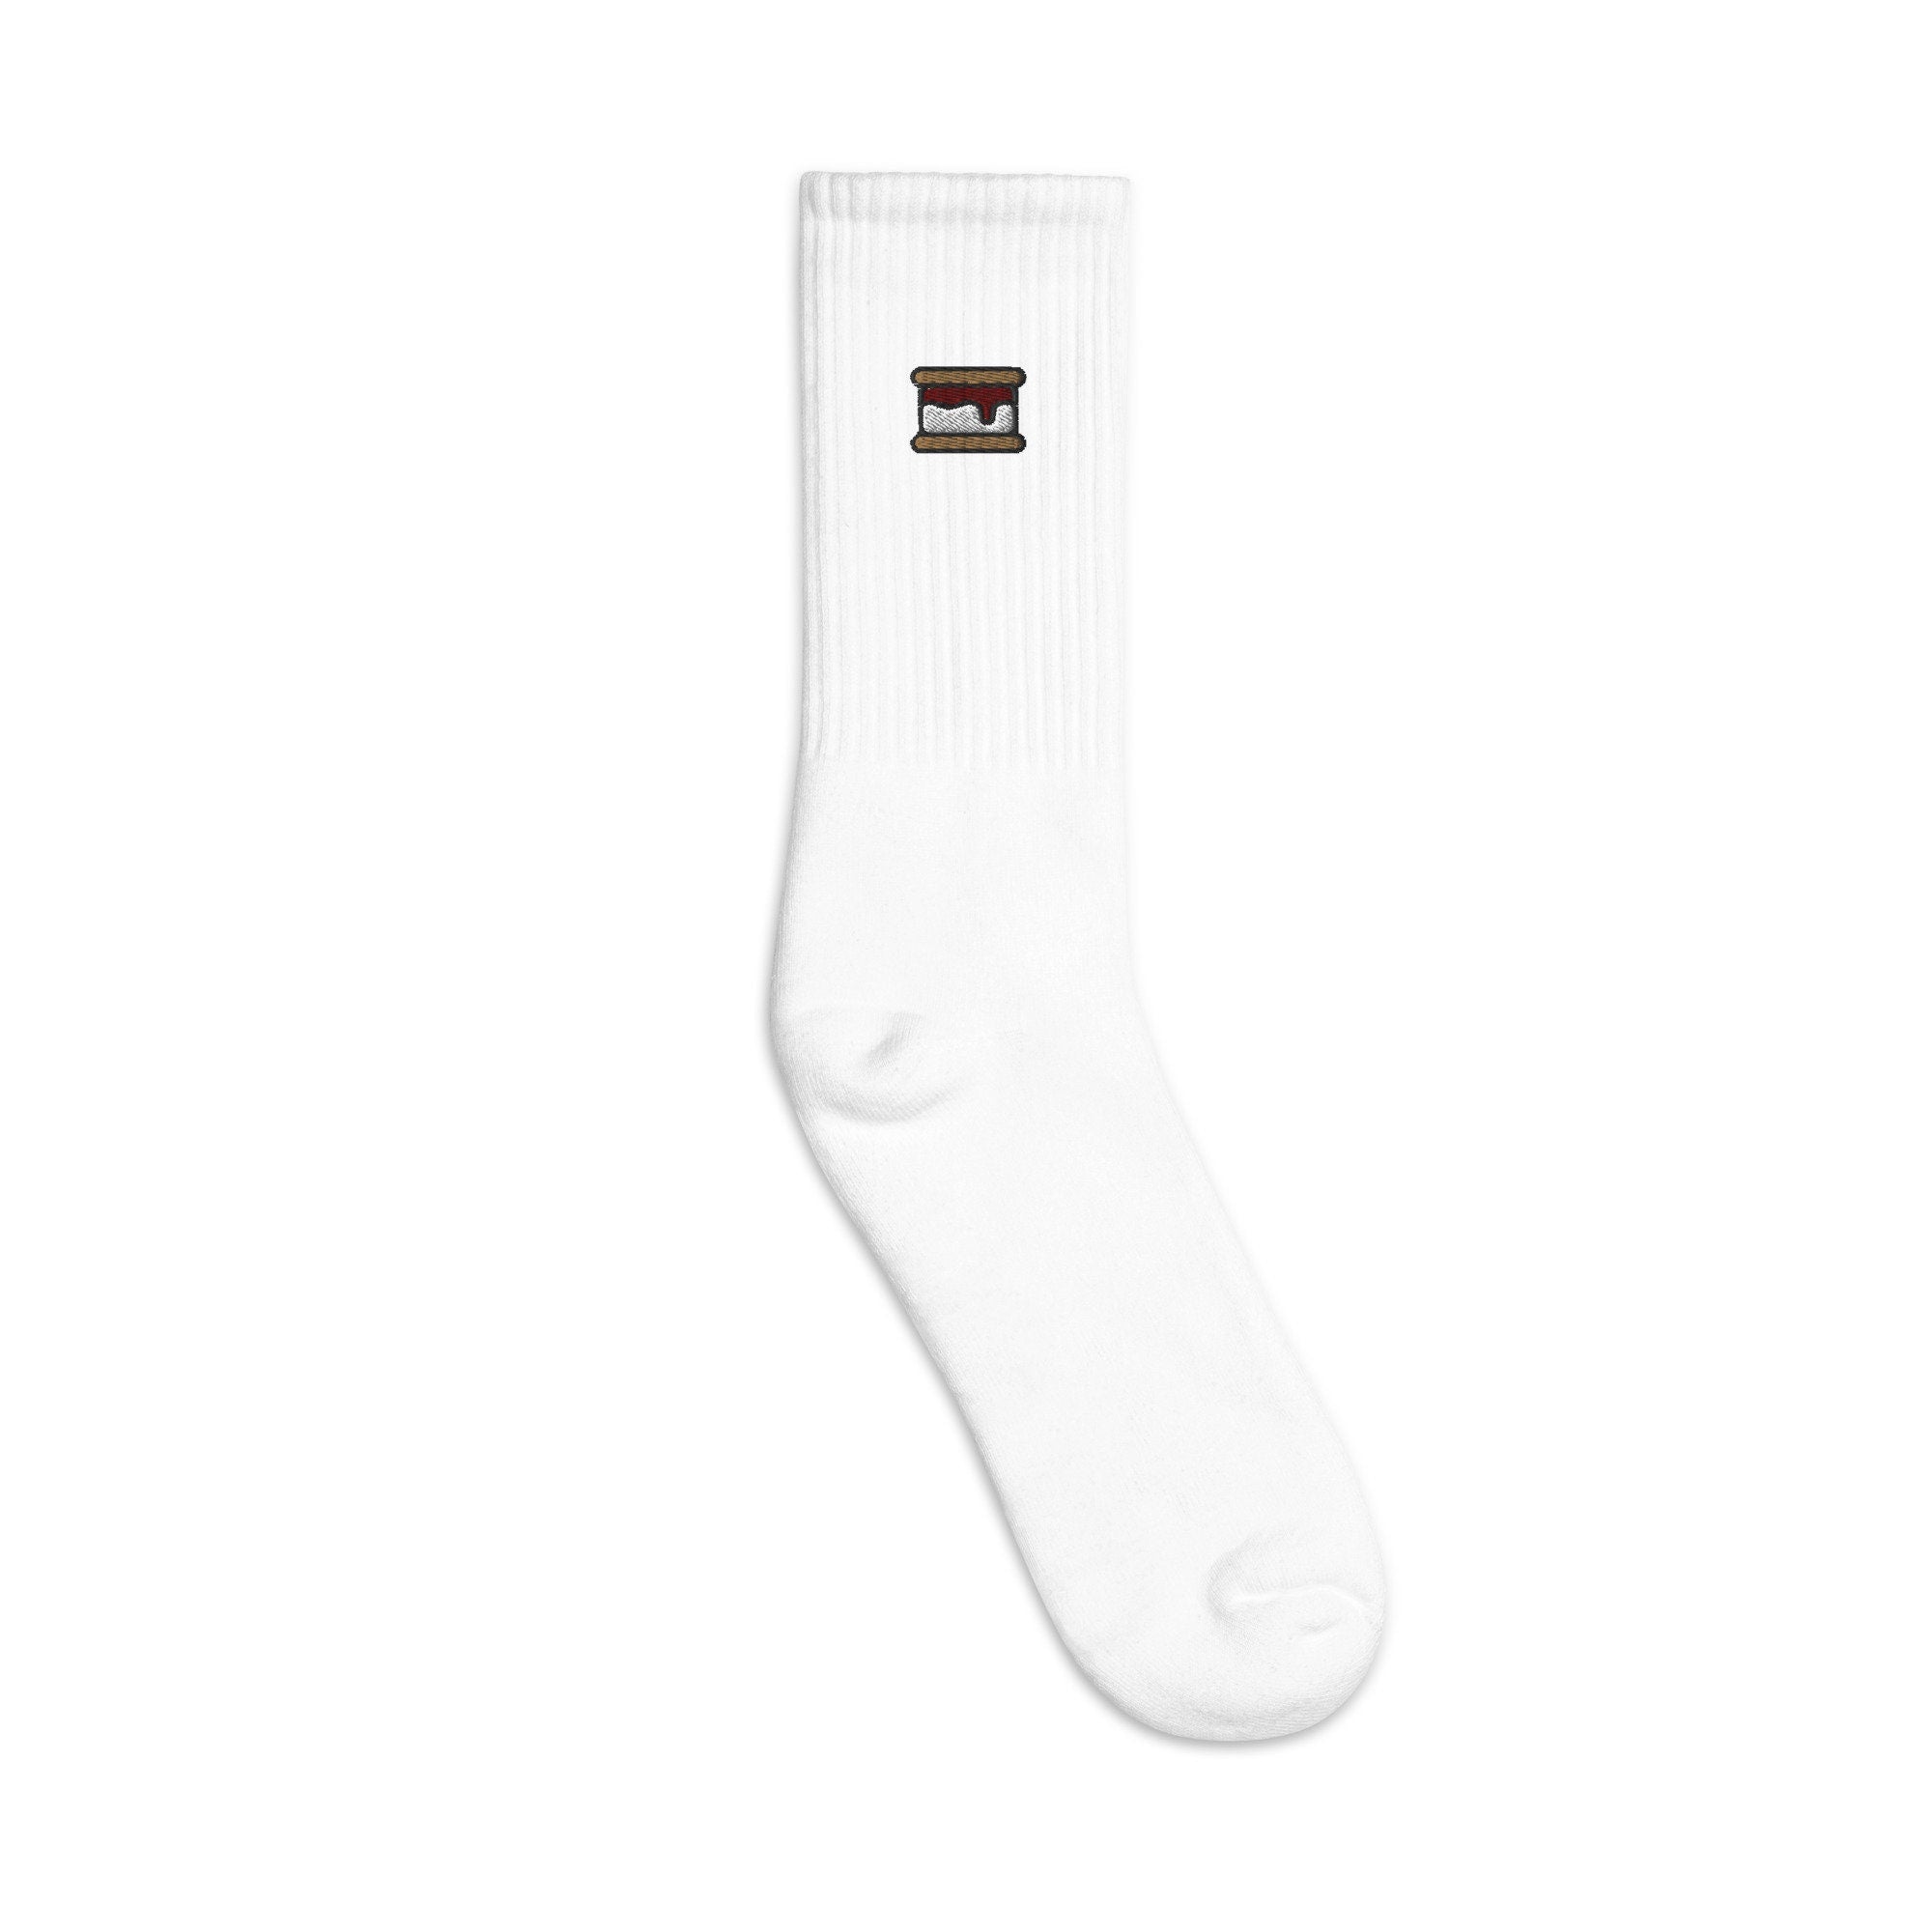 Smore Embroidered Socks, Premium Embroidered Socks, Long Socks Gift - Multiple Colors